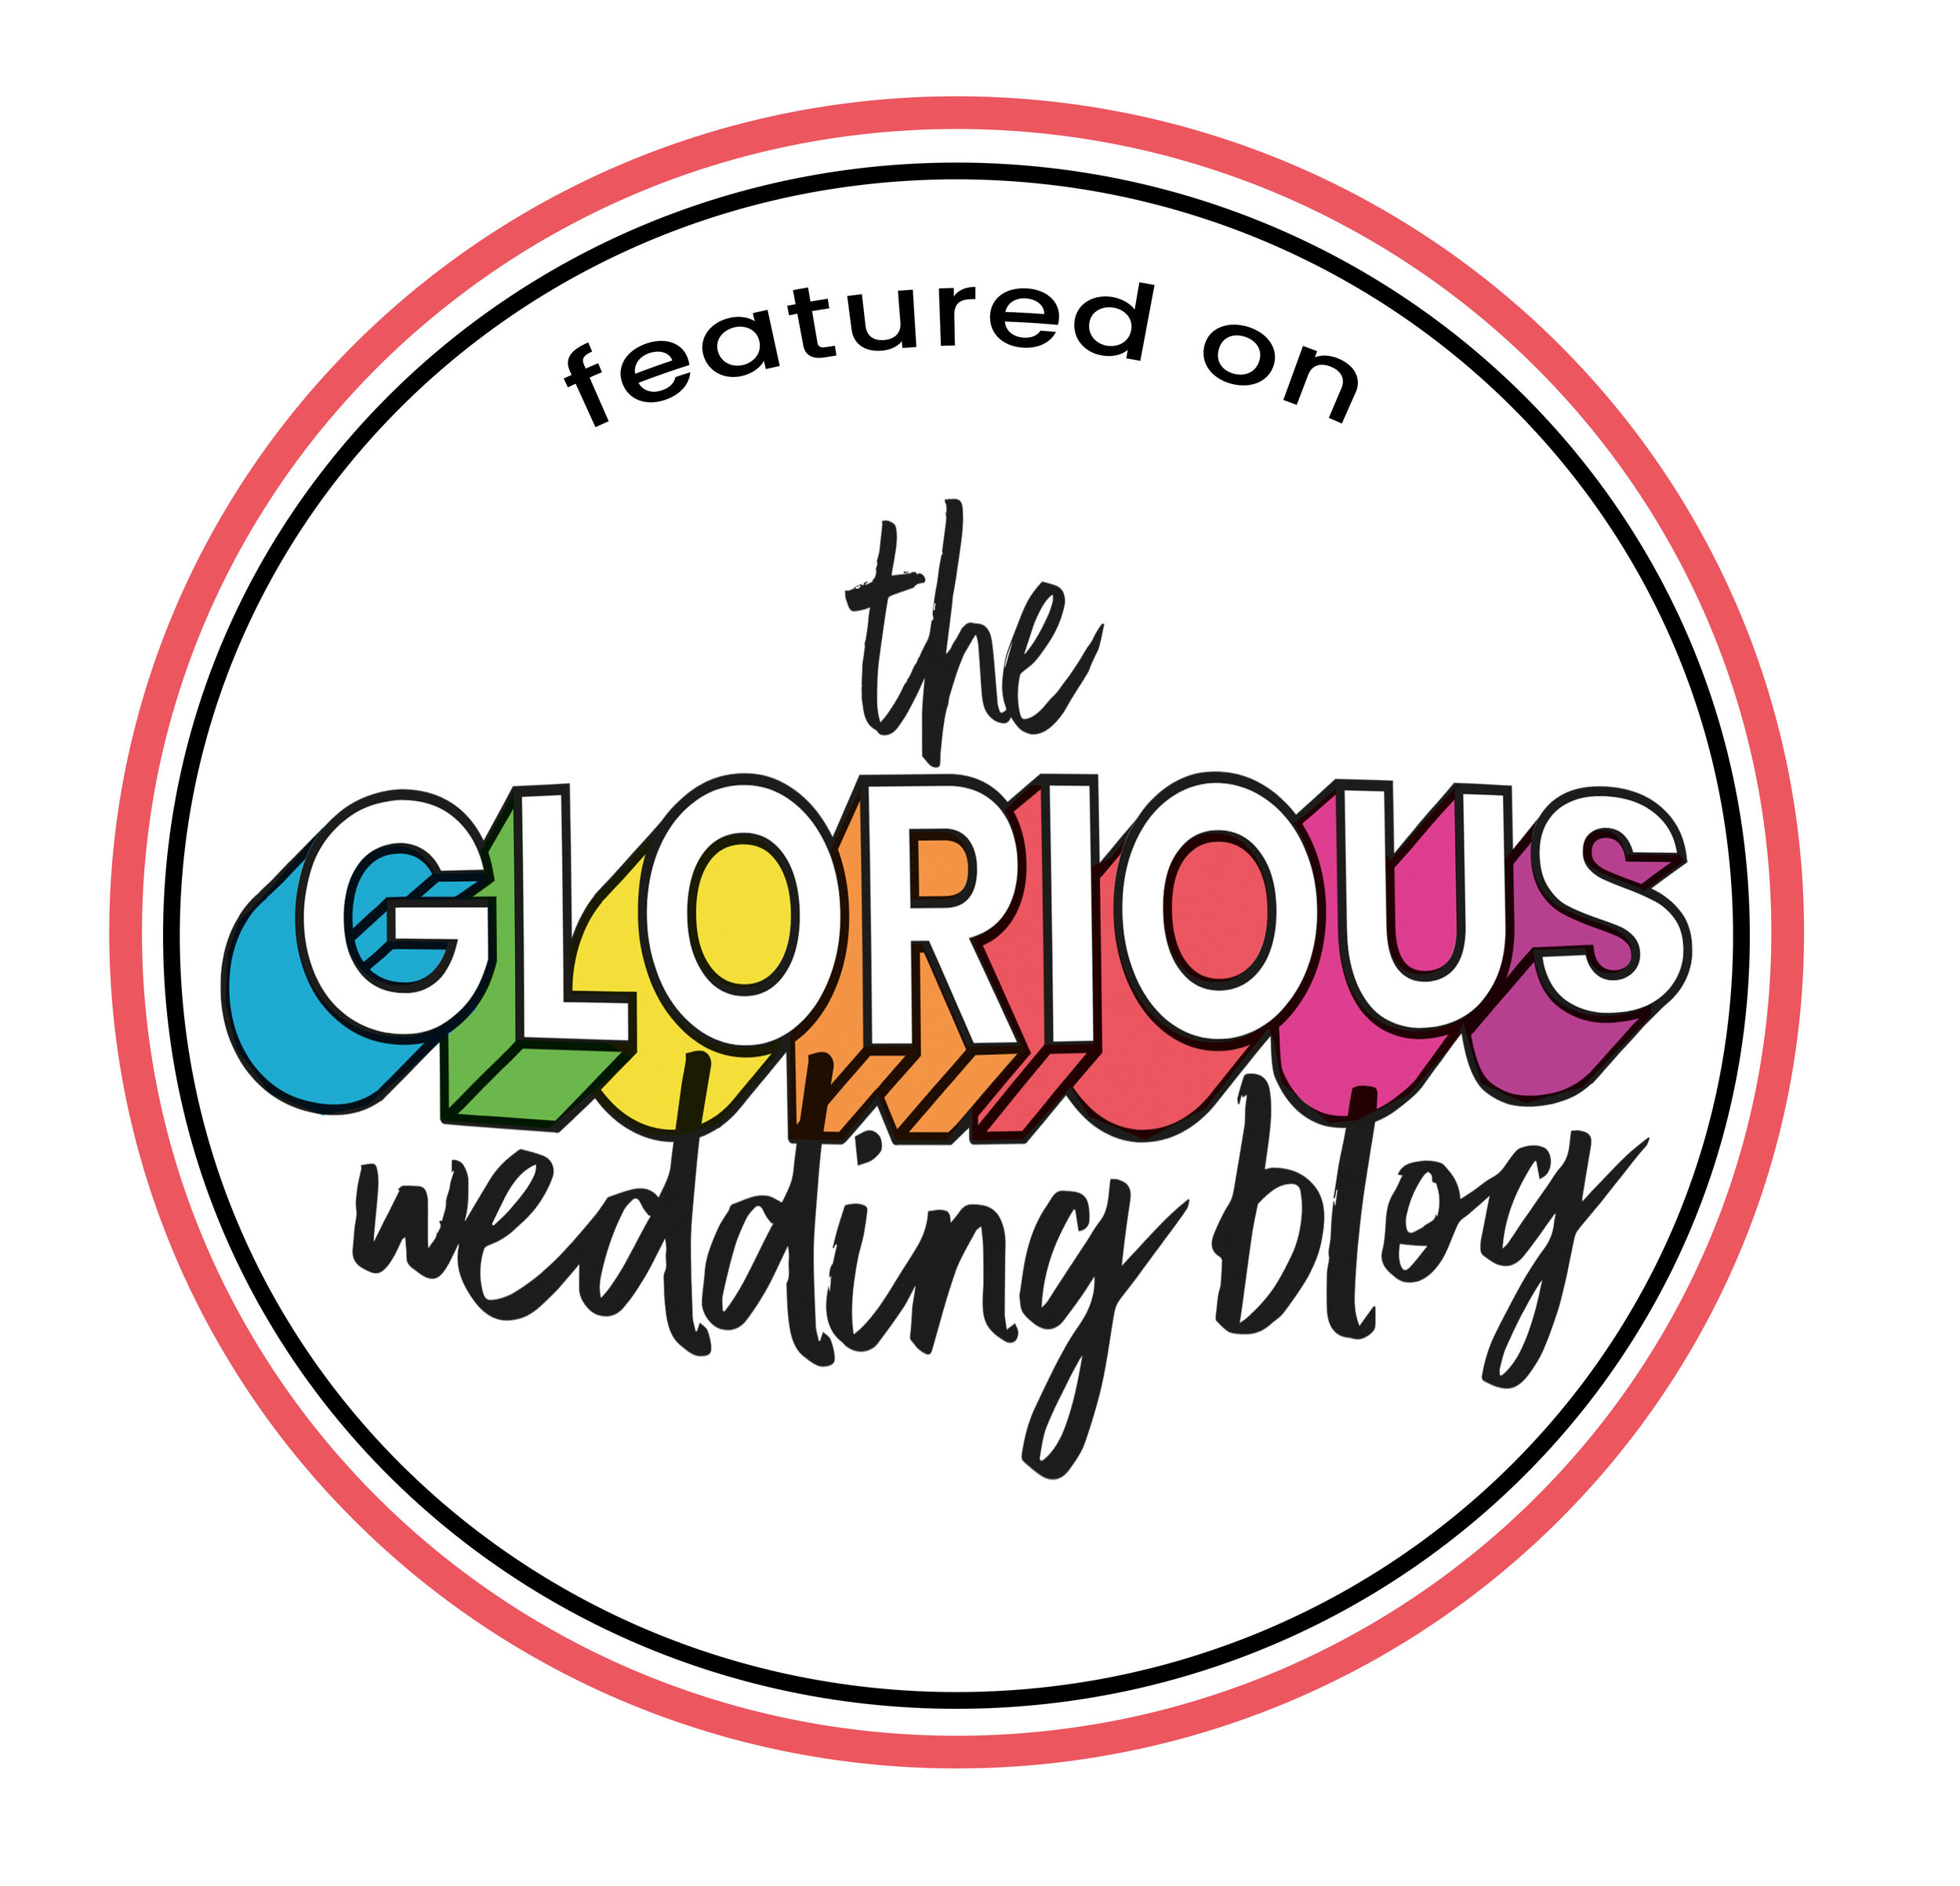 Featured on the Glorious Wedding Blog - Kieran Bellis Photography